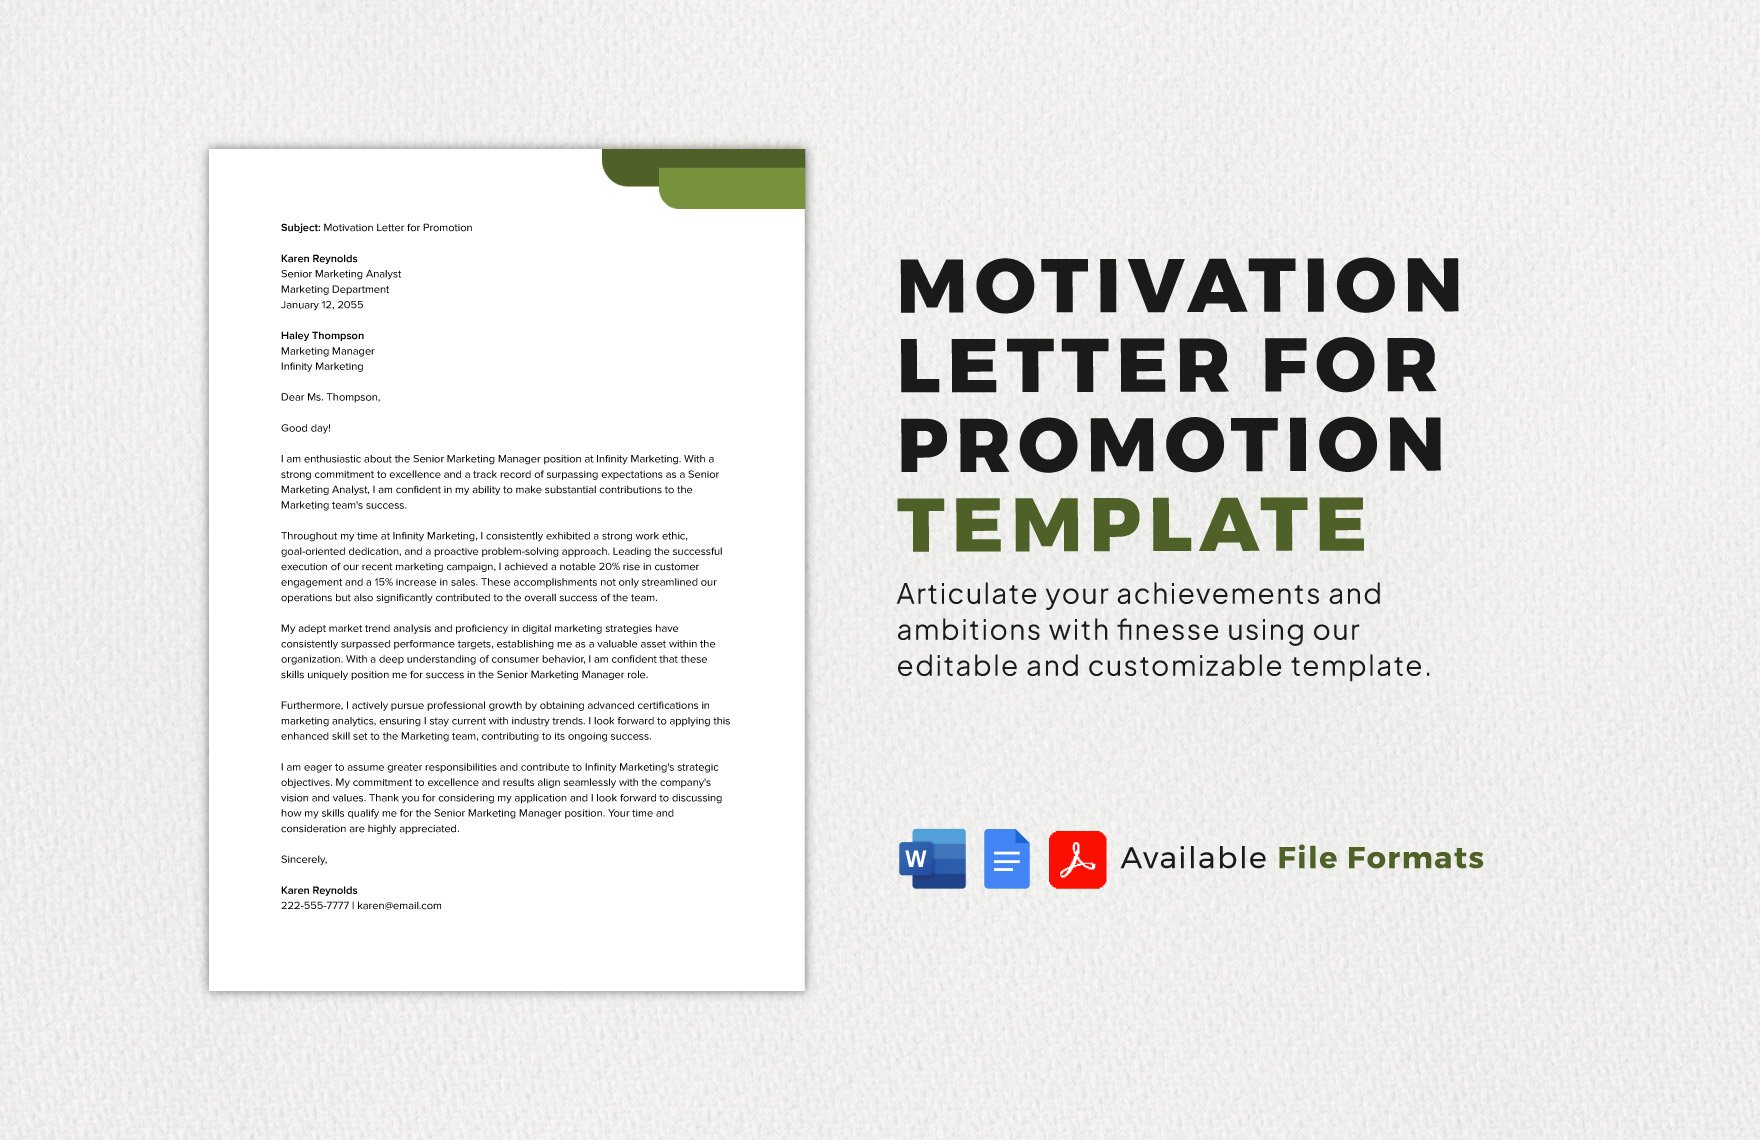 Motivation Letter for Promotion Template